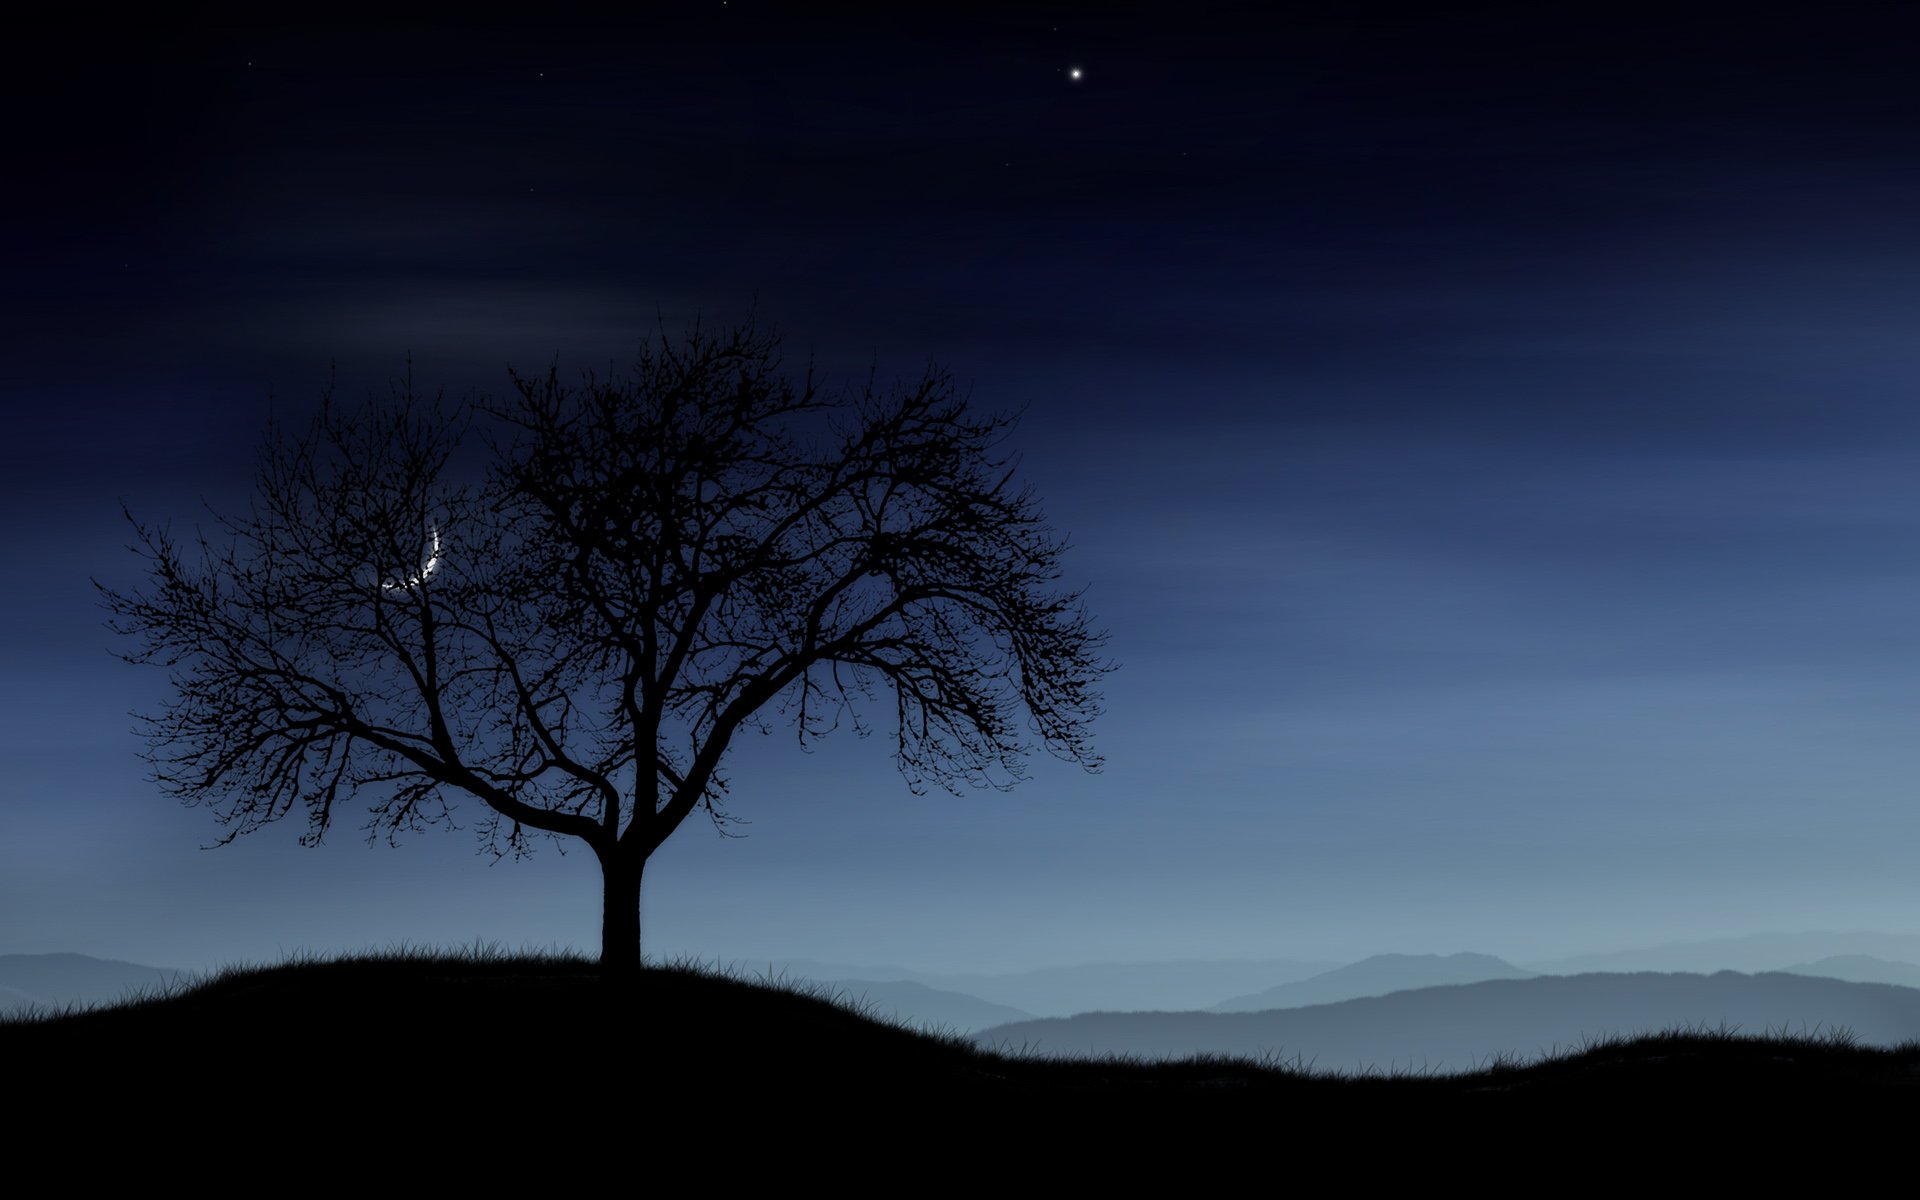 Background, moon, tree, vladstudio